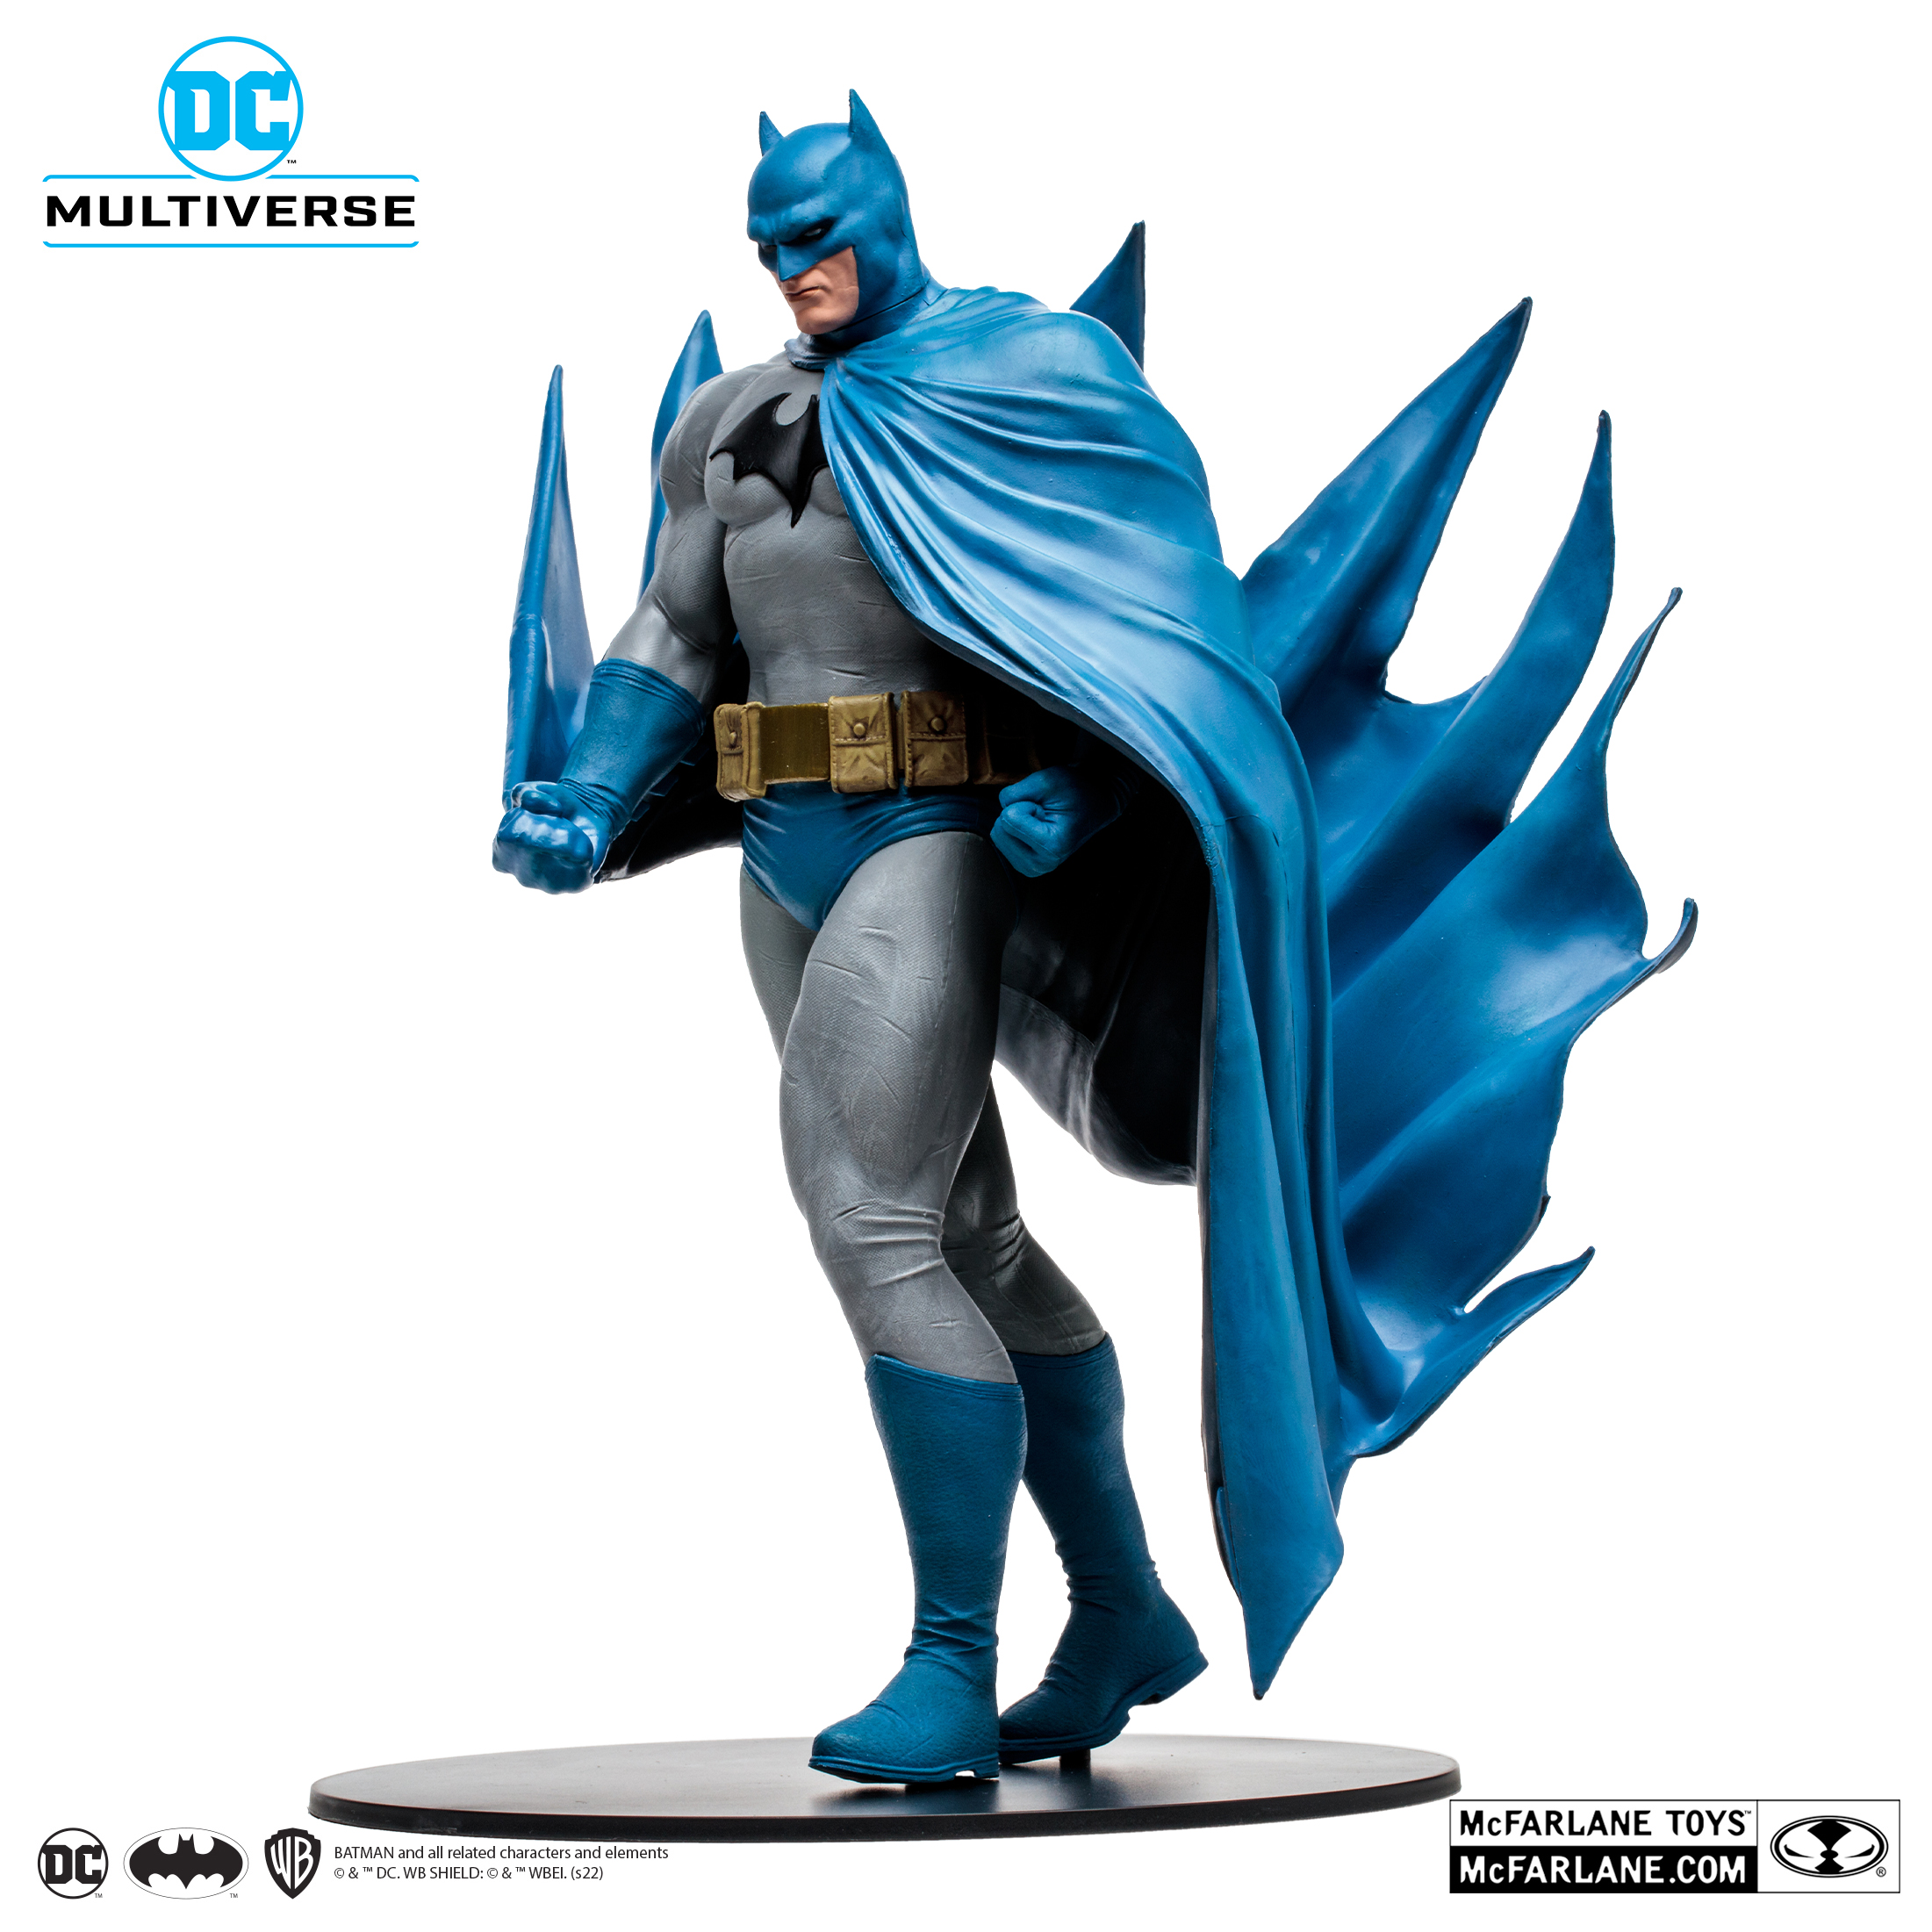 McFarlane Toys Releases New Batman, The Joker And Harley Quinn Statues -  Dark Knight News